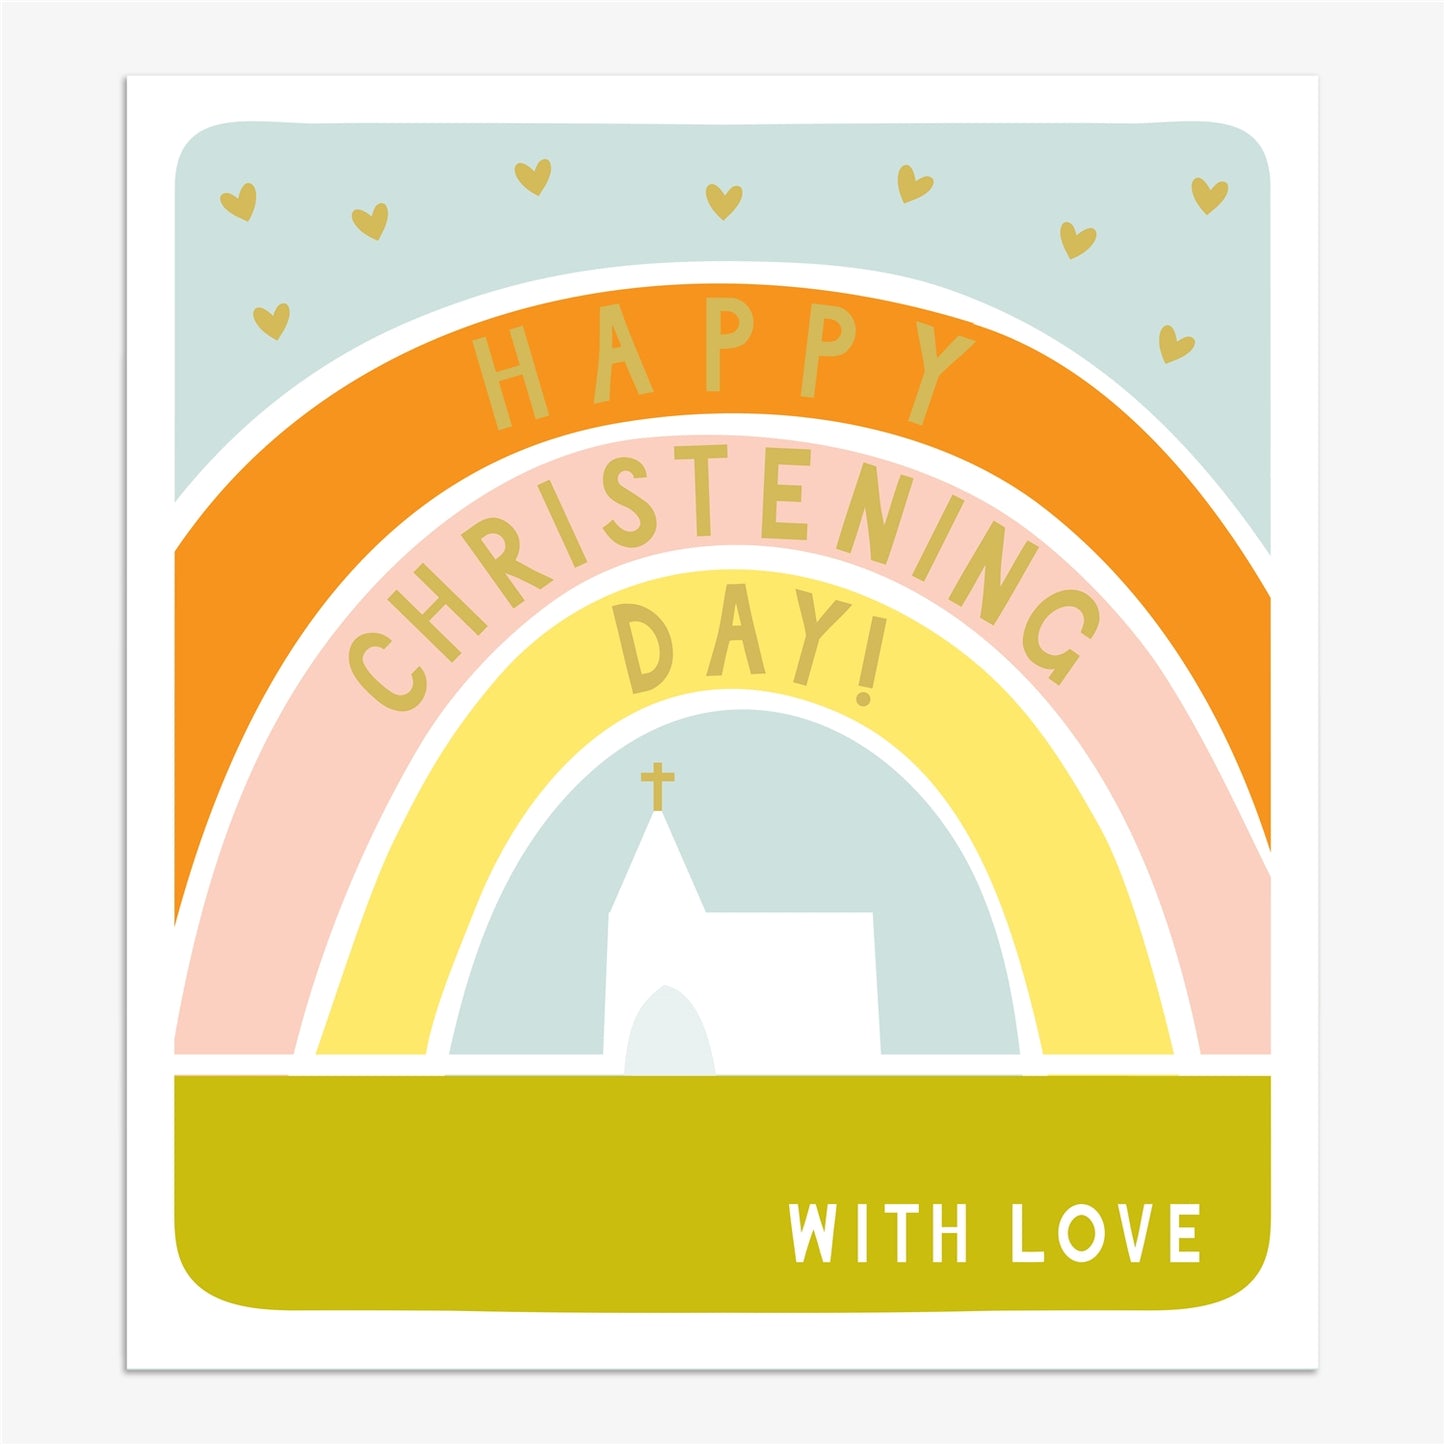 Happy Christening Day - Card